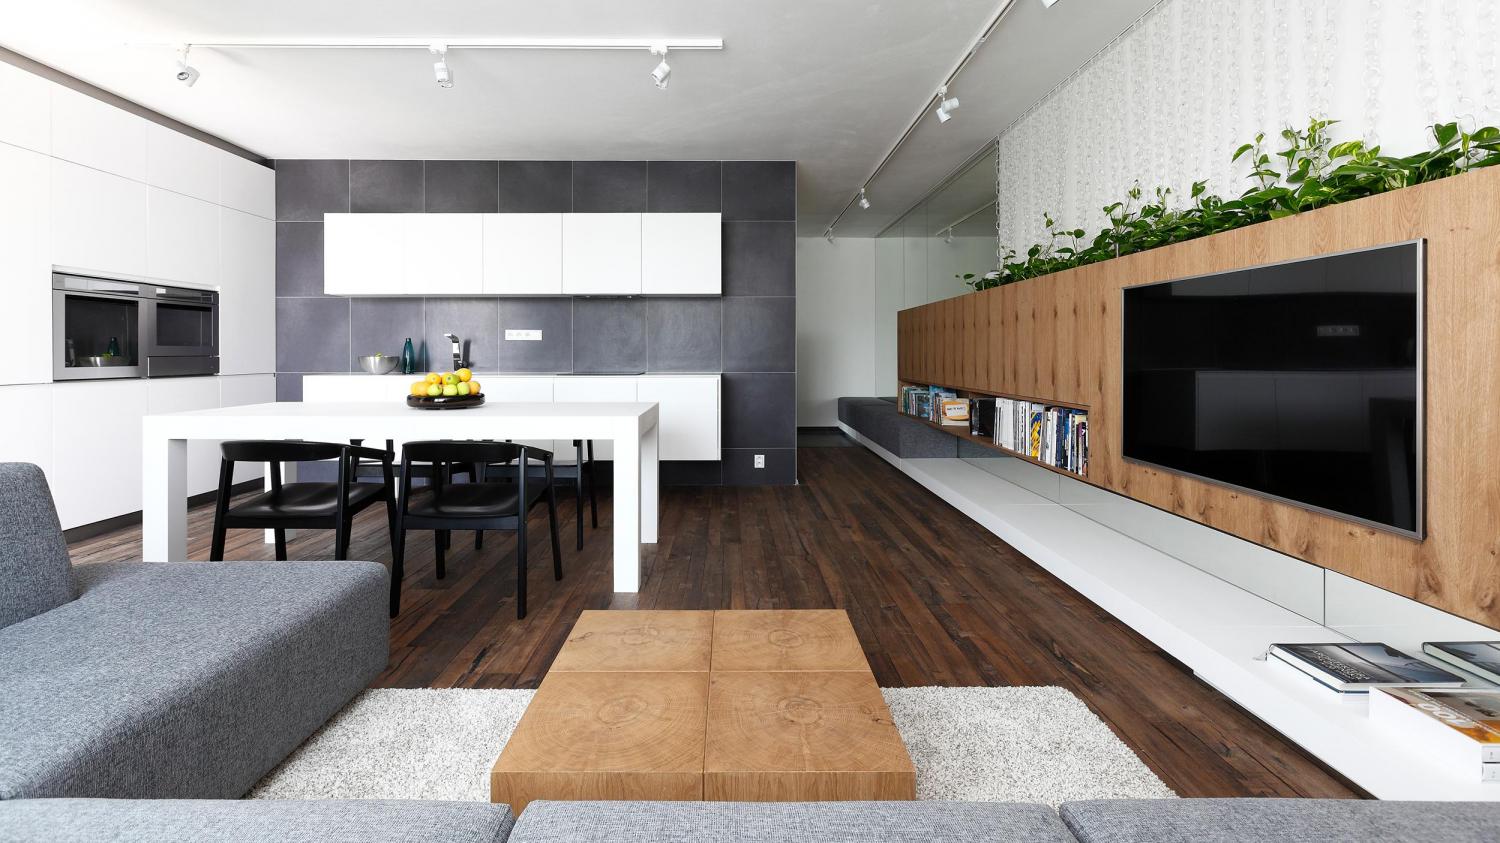 Elegant Apartment Interior Design With Perfect Layout Arrangement - RooHome